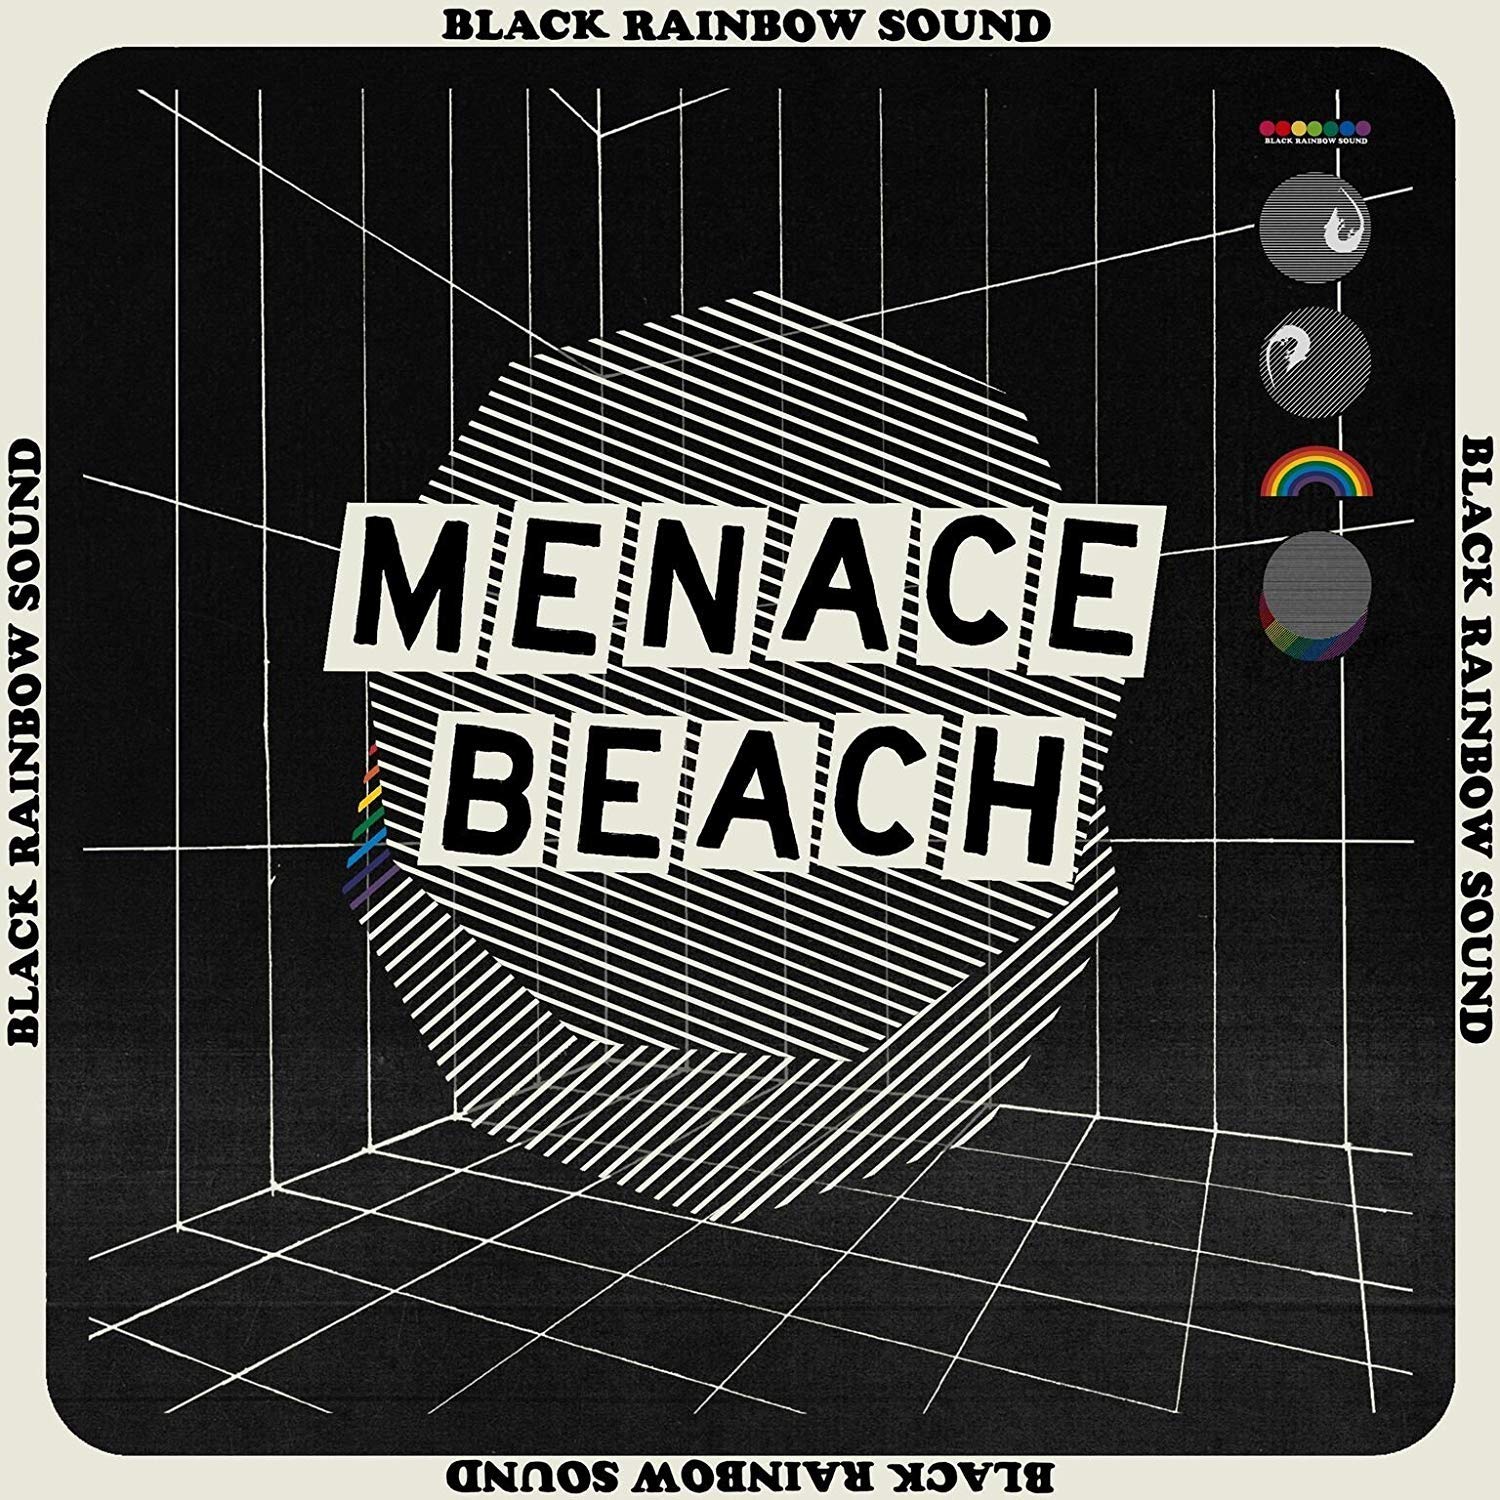 Black Rainbow Sound (Limited Edt. Lp + Download) [Vinyl LP]